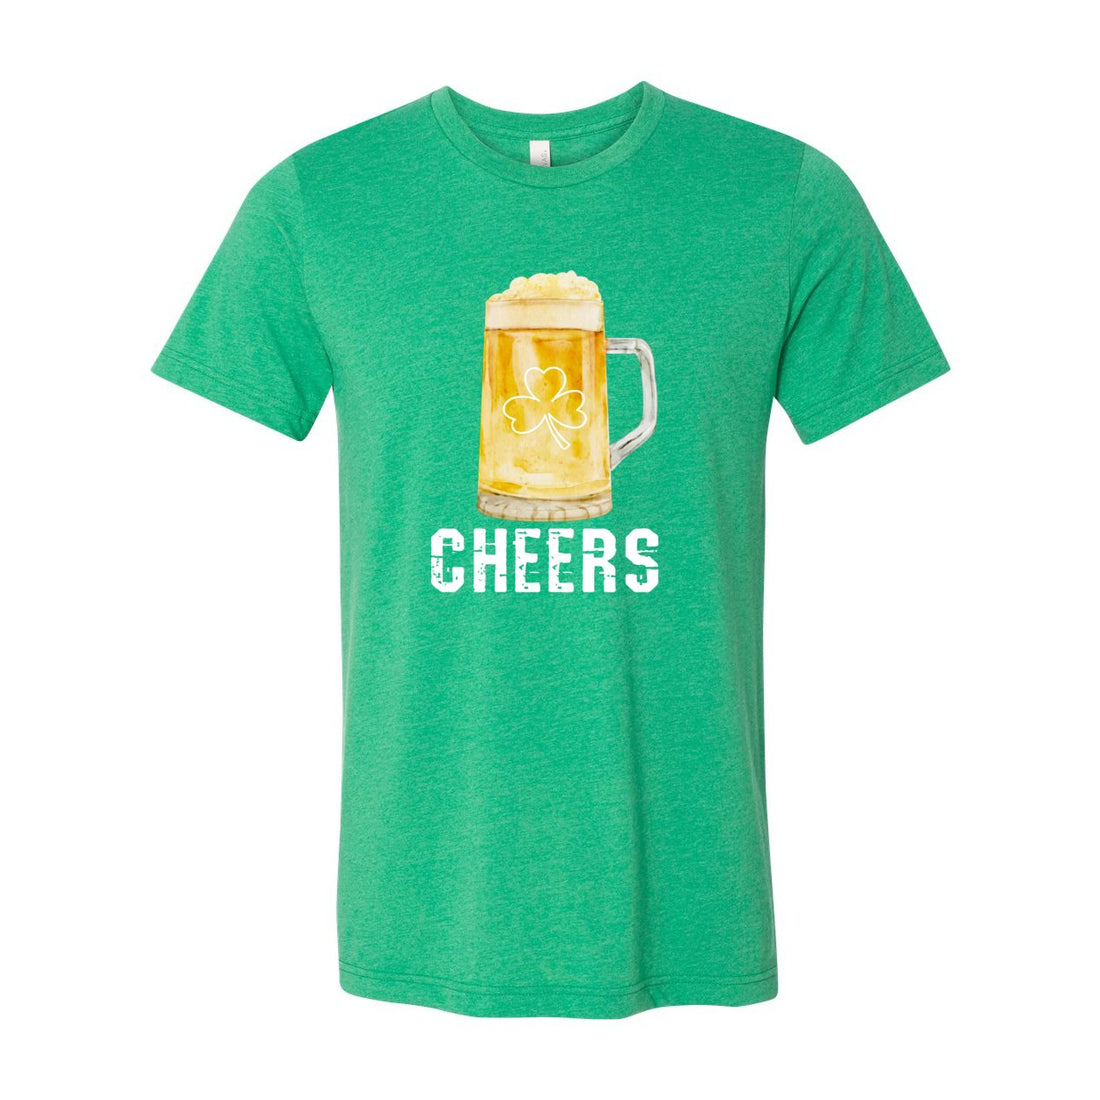 Cheers Beer Short Sleeve Jersey Tee - T-Shirts - Positively Sassy - Cheers Beer Short Sleeve Jersey Tee